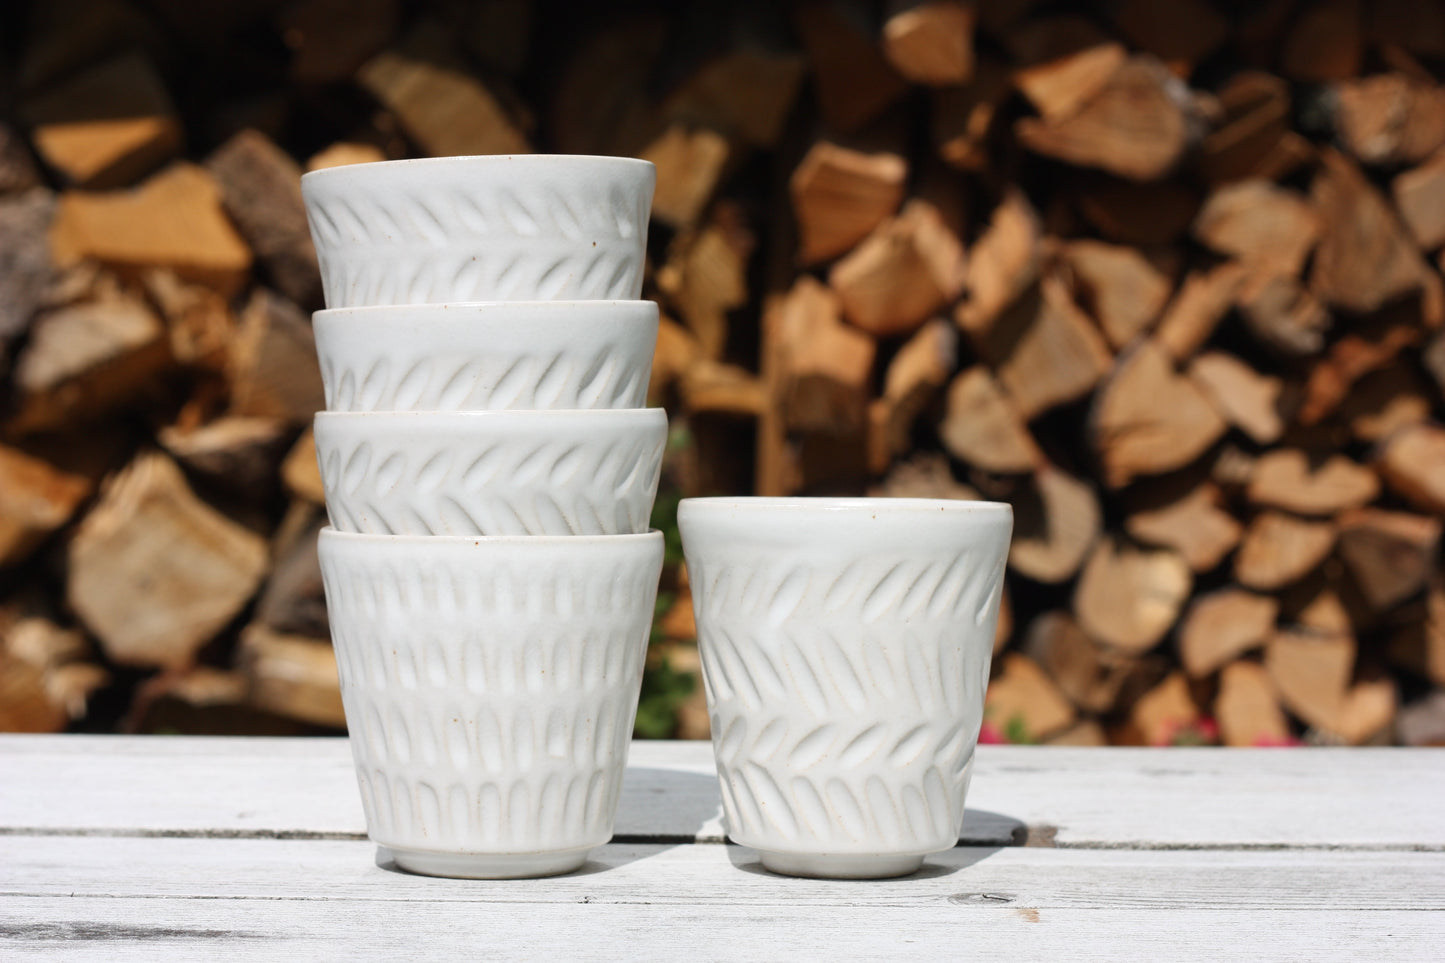 350ml 12 oz Carved Pottery Latte Cup Handle free Mug handmade stacking ceramic cup beaker tumbler L